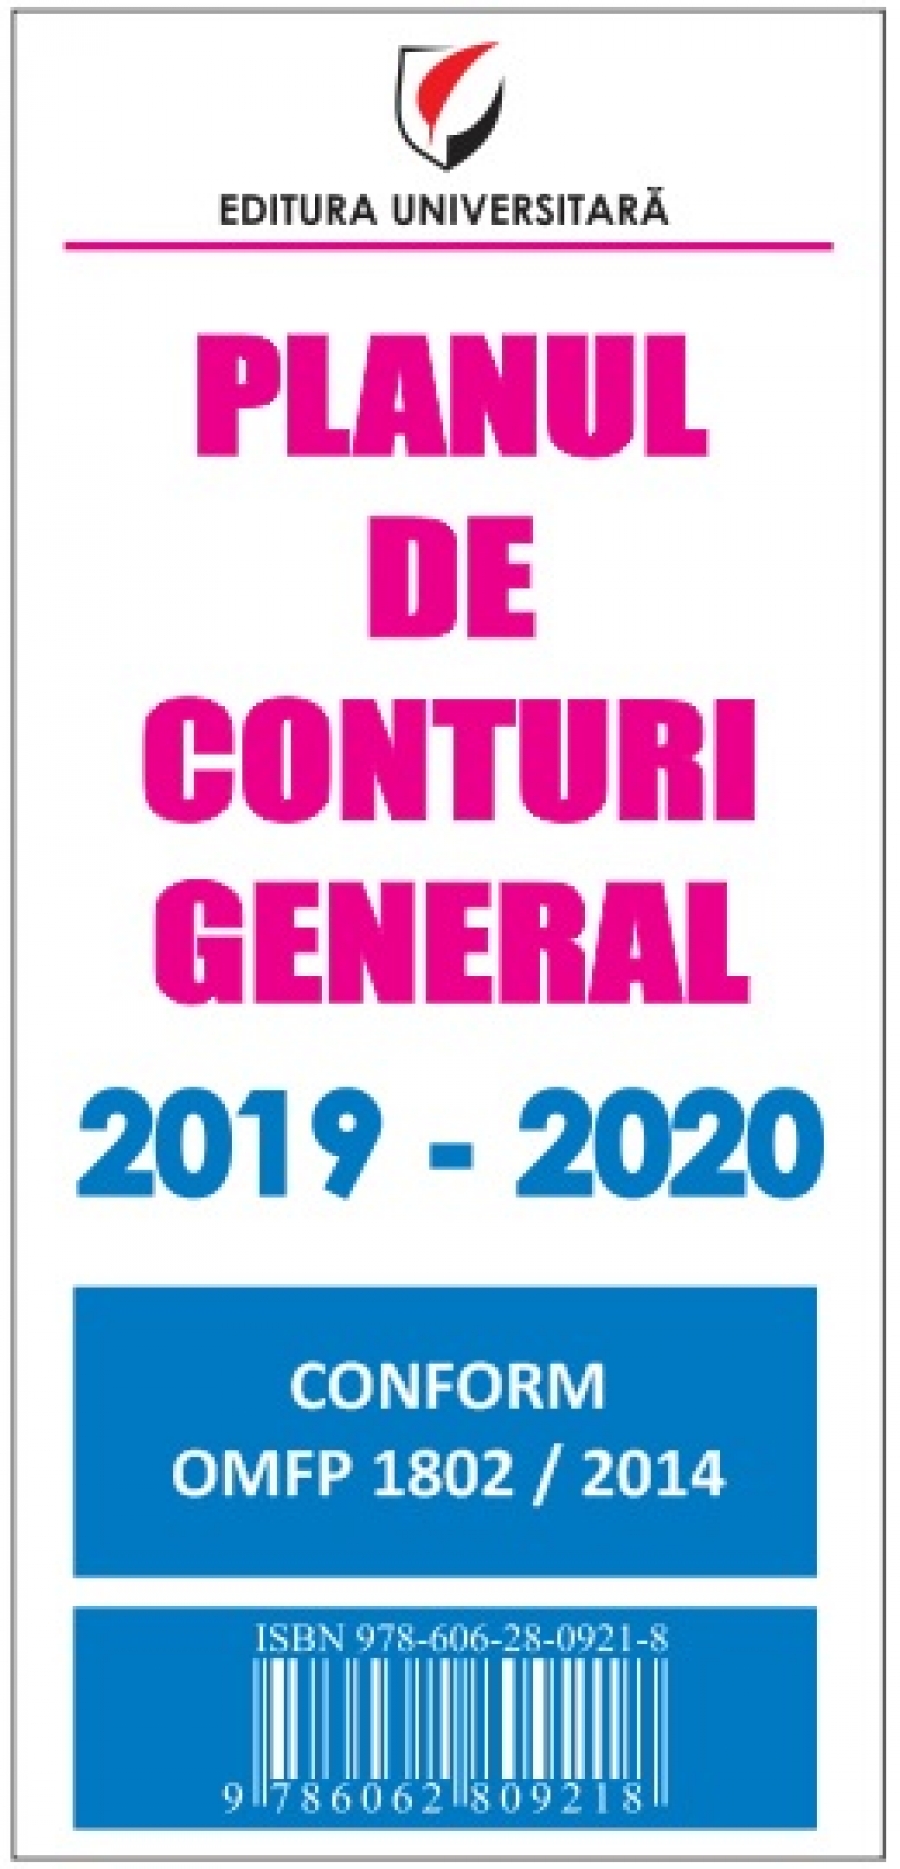 Planul de conturi general 2019-2020 |